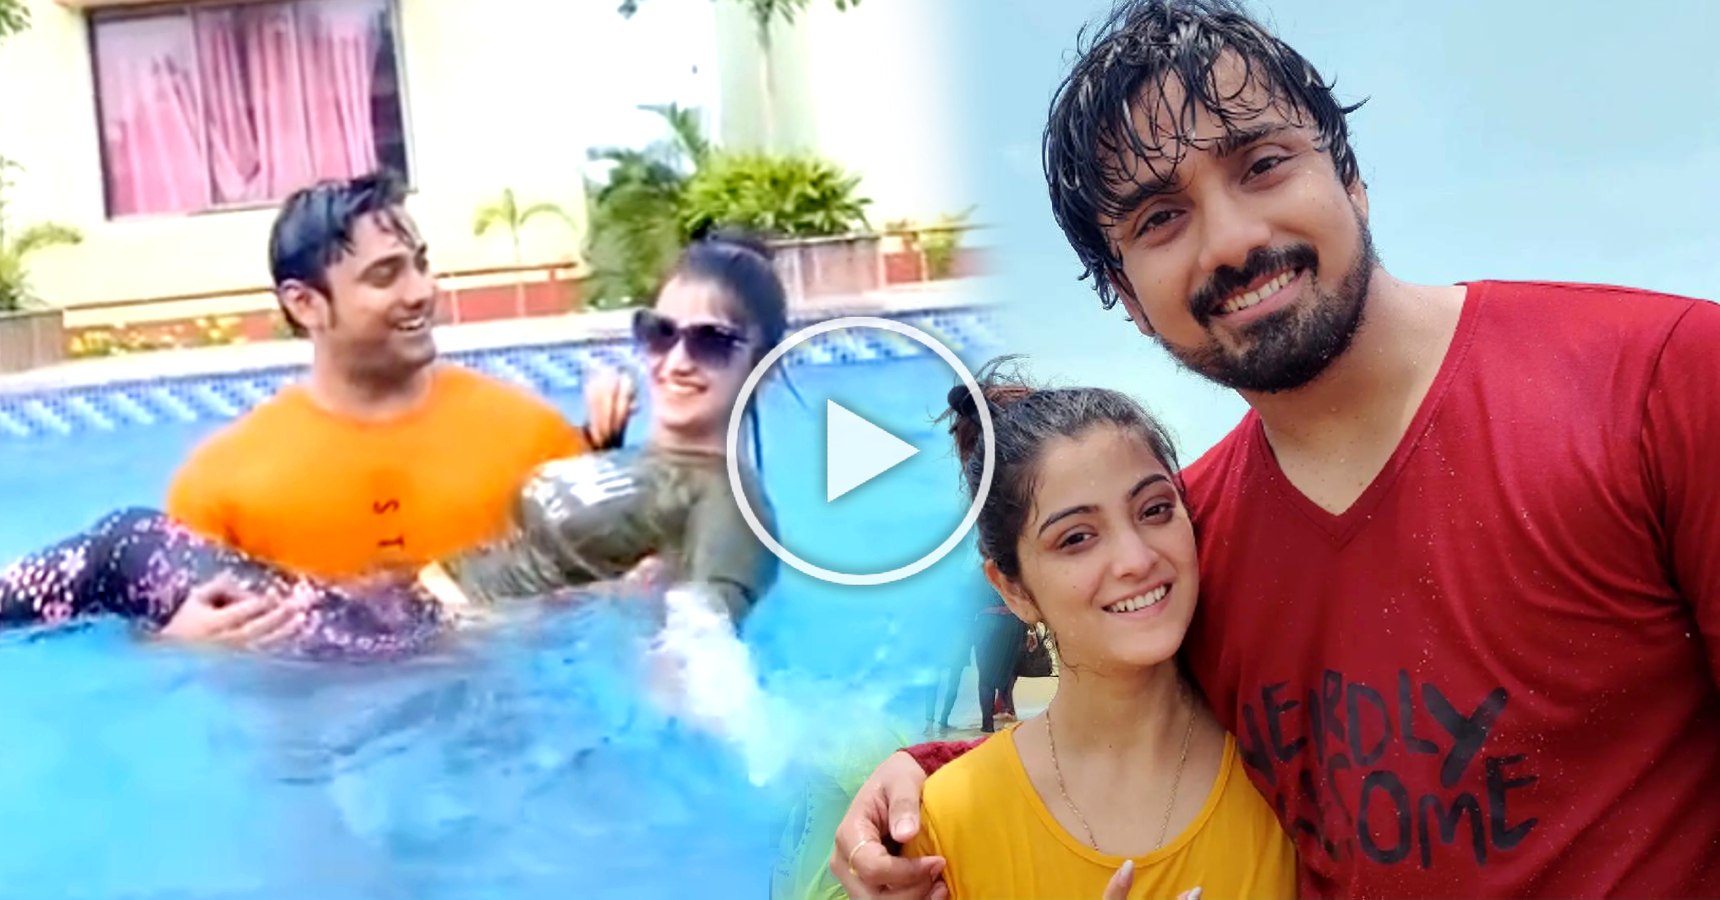 Sweta Bhattacharya Rubel Das Swimming Pool romance video viral on social media